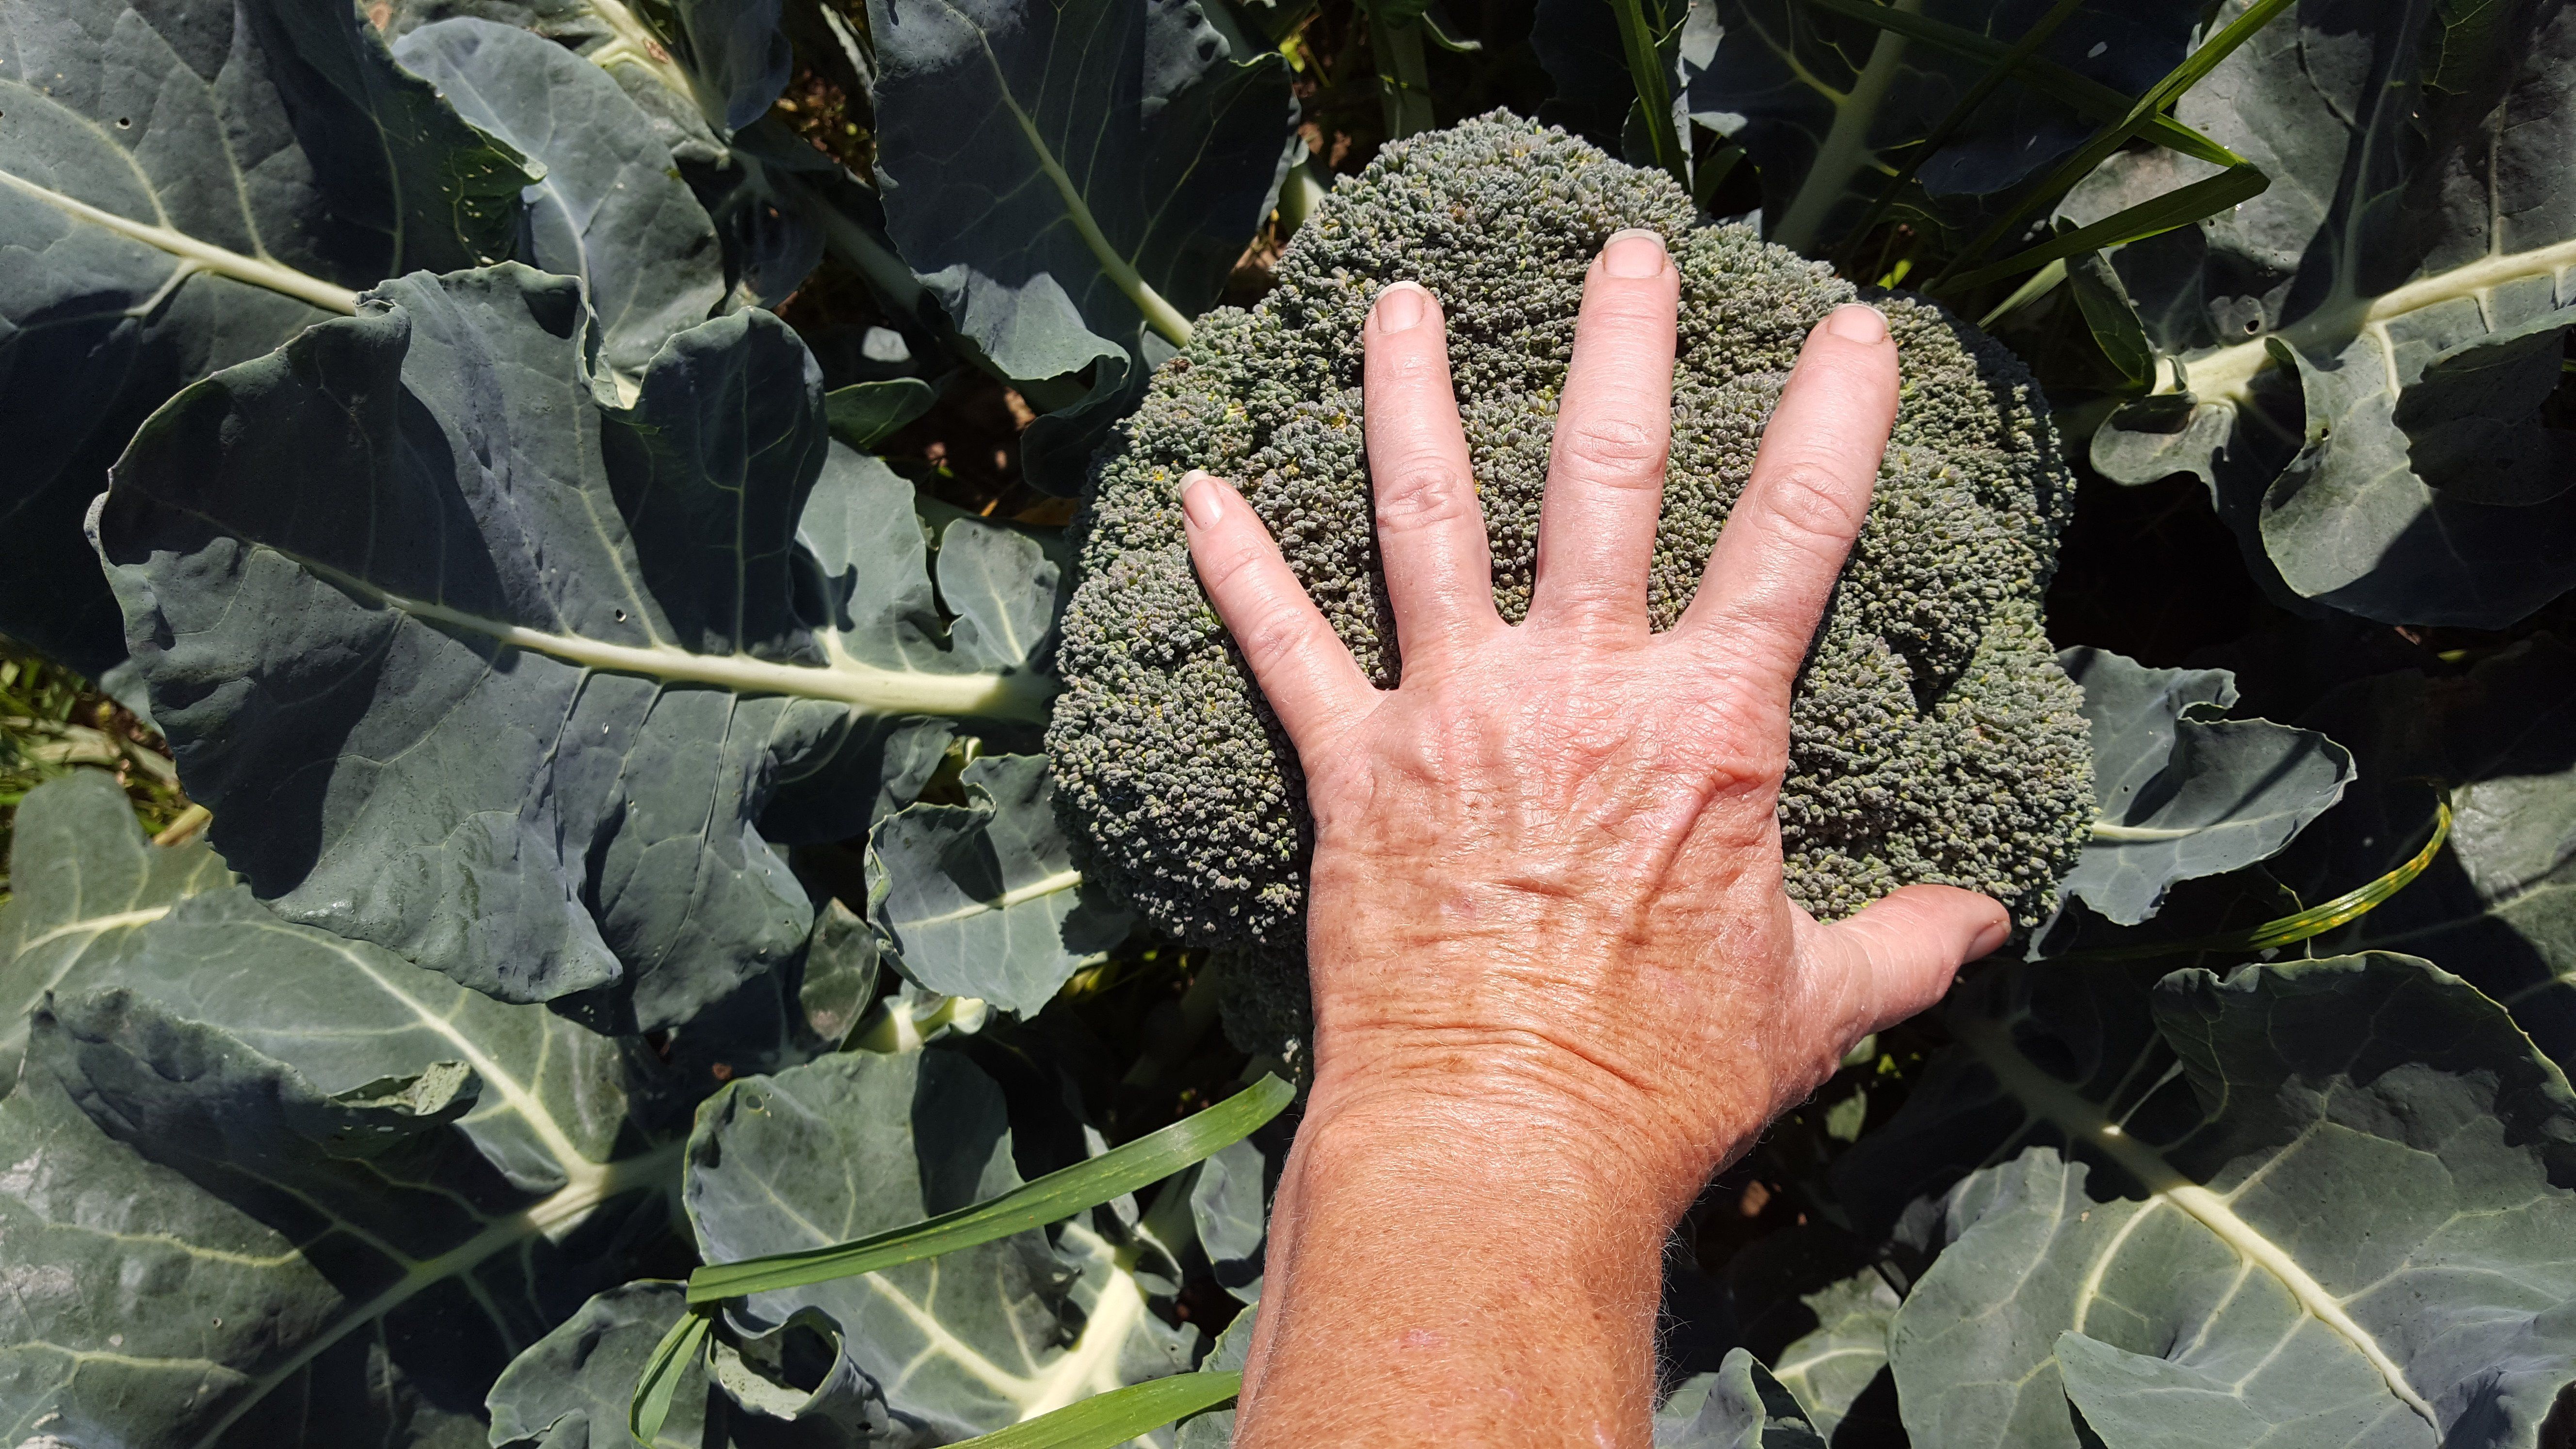 Next Happening: Ginormous Broccoli